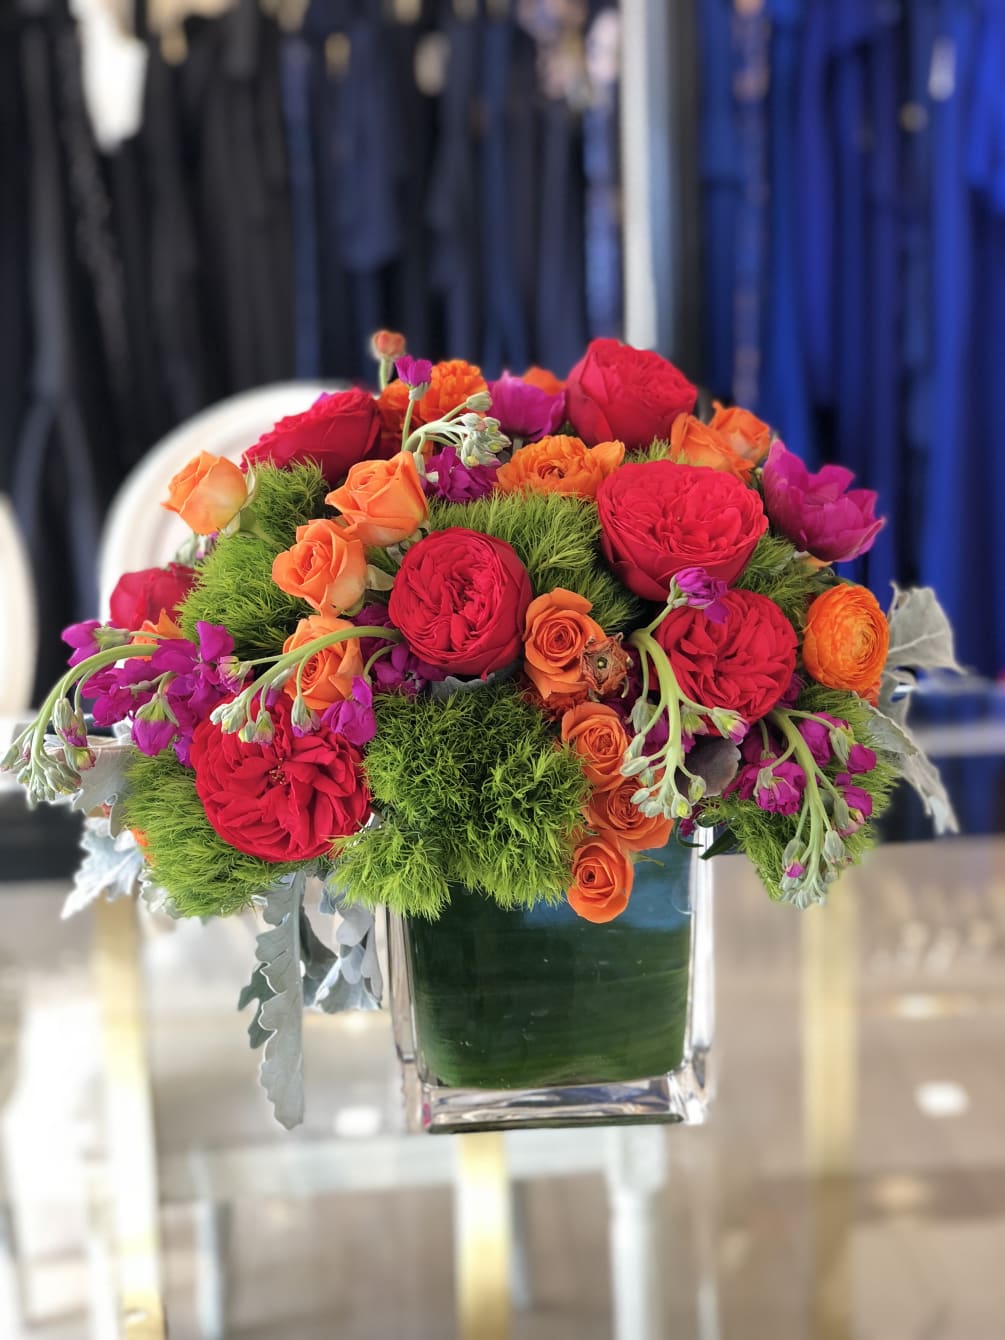 Sq glass vase featuring red Garden roses, orange roses, green dianthus, anemones